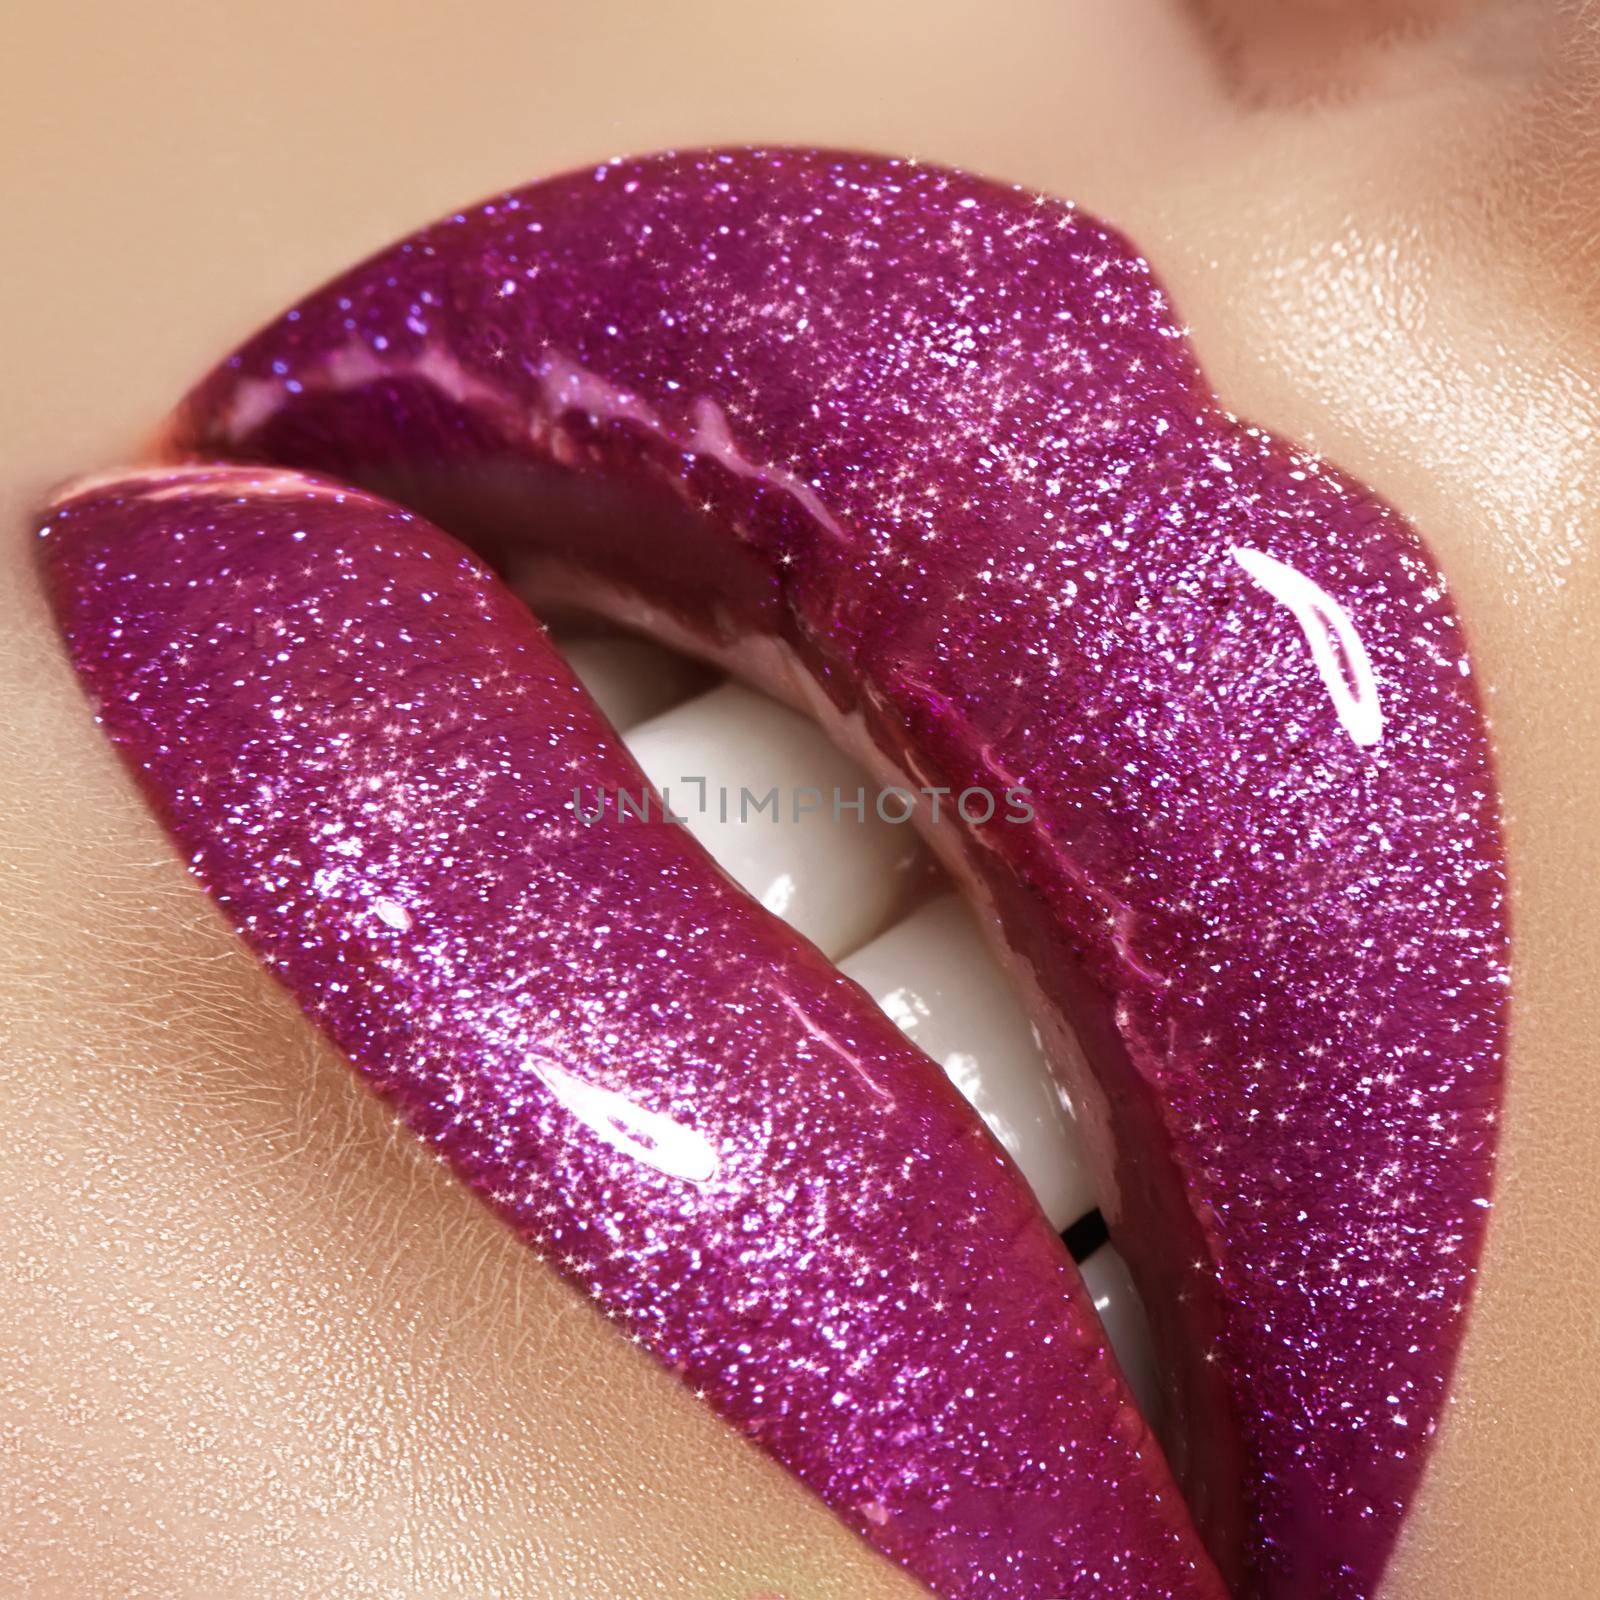 Glamour magenta gloss lip make-up. Fashion makeup beauty shot. Close-up female sexy full lips with celebrate pink gloss by MarinaFrost